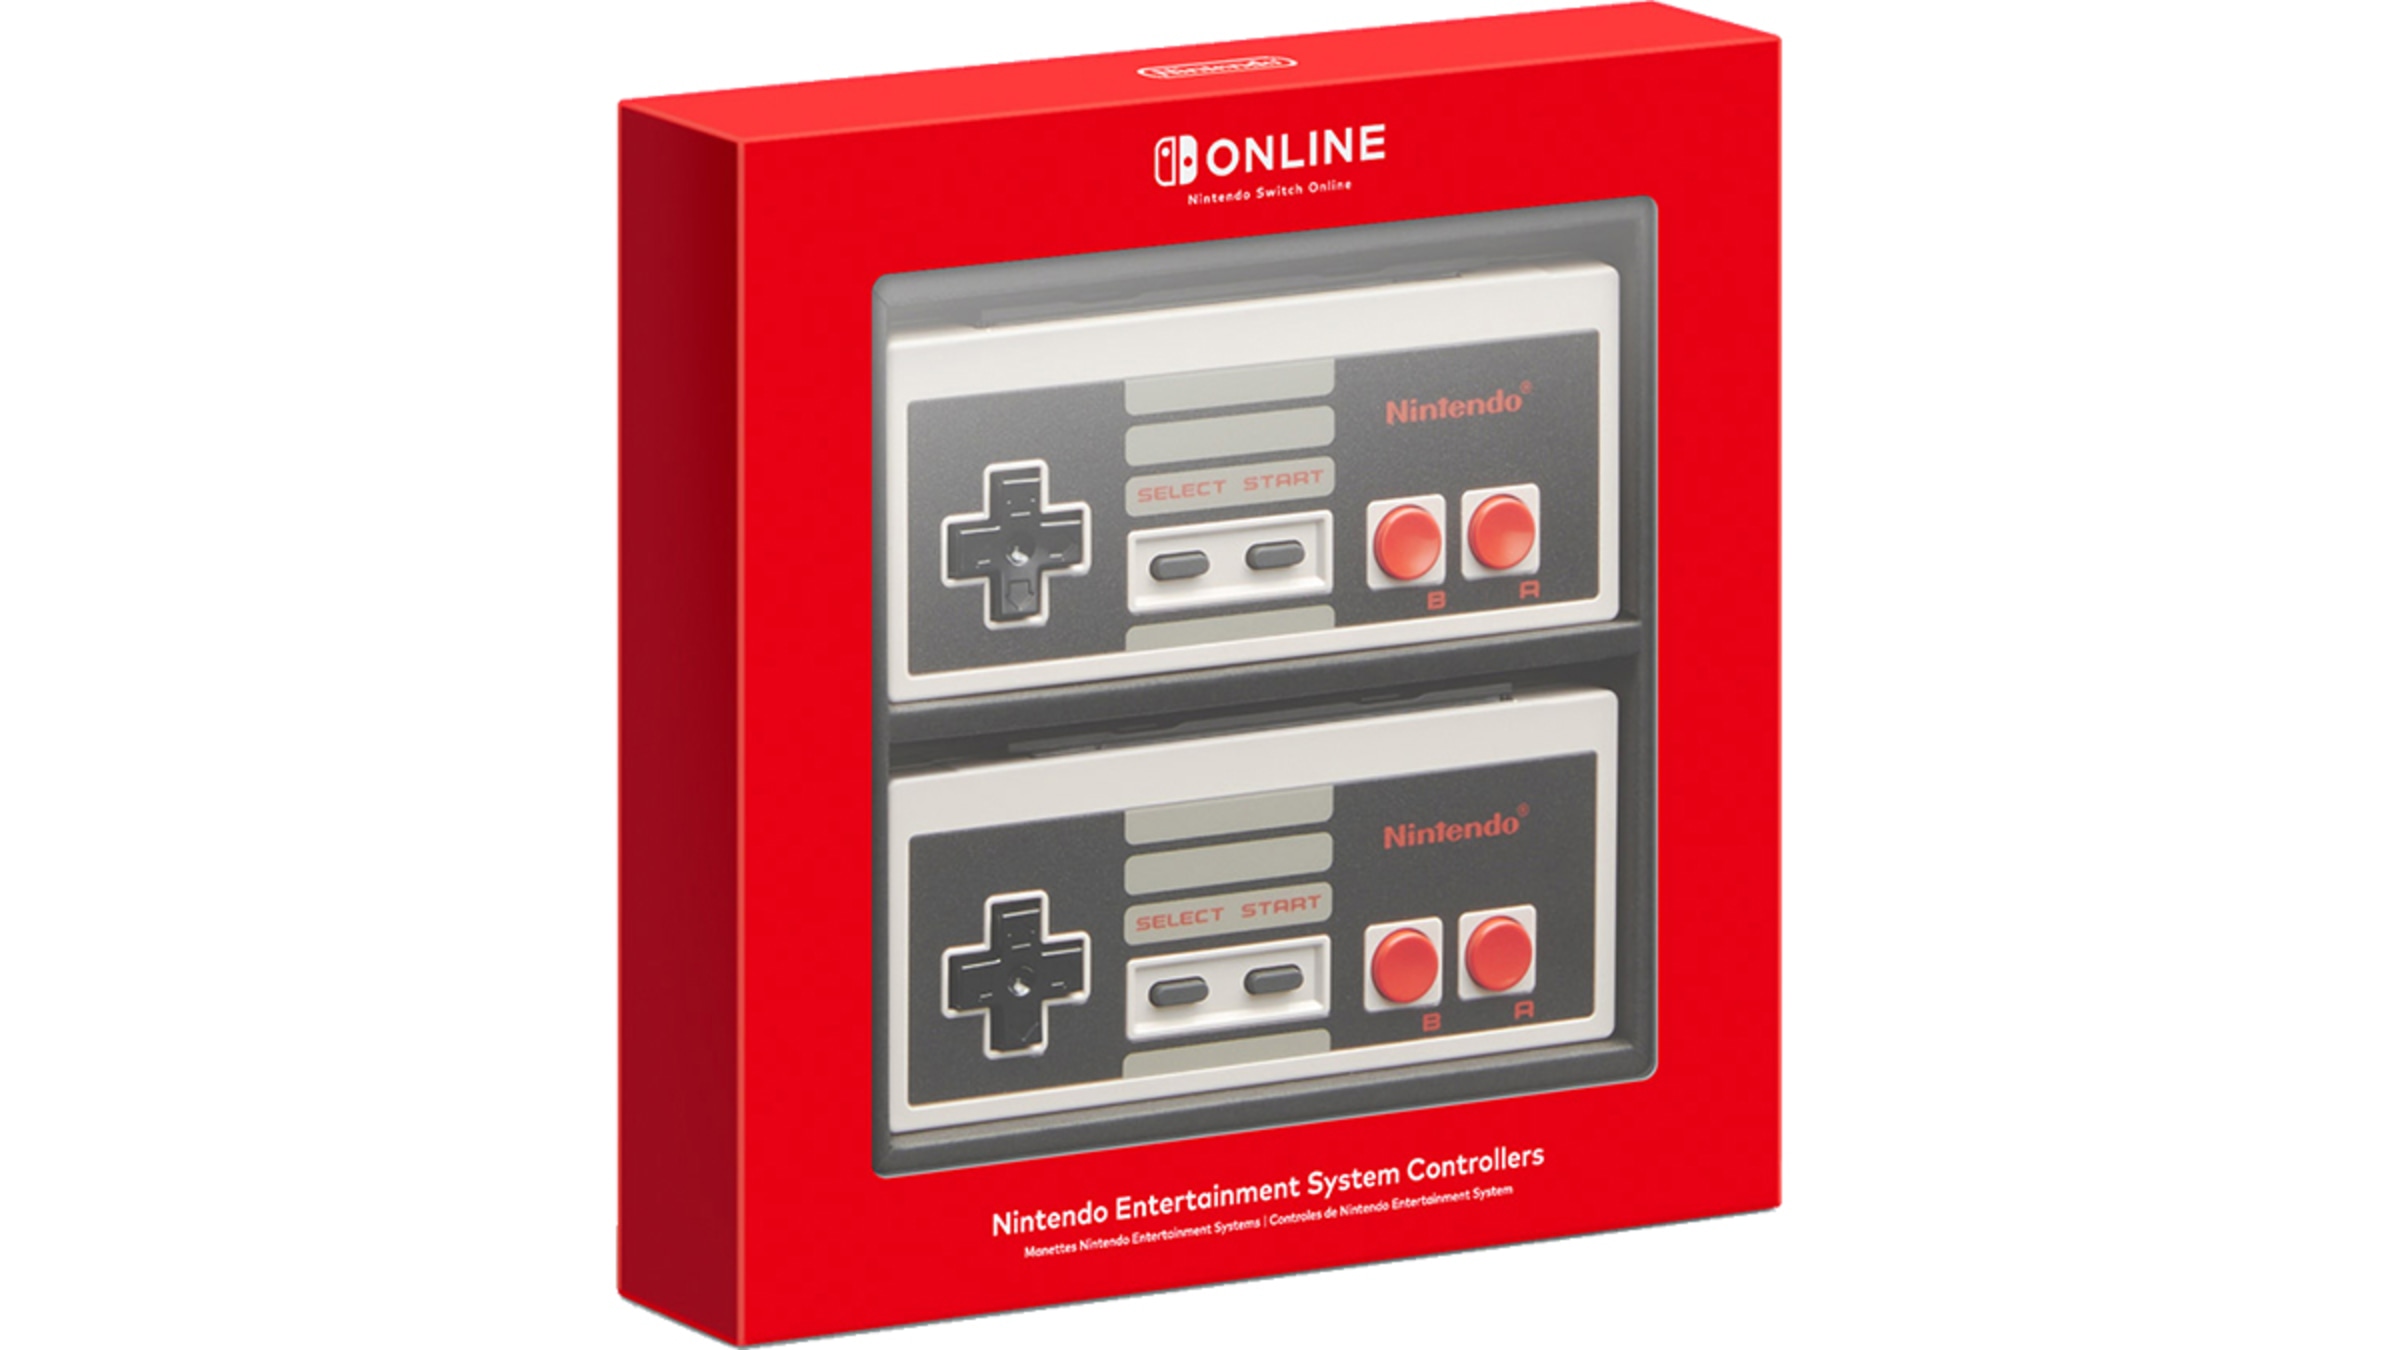 Nintendo Entertainment System Controllers - Hardware - Nintendo 